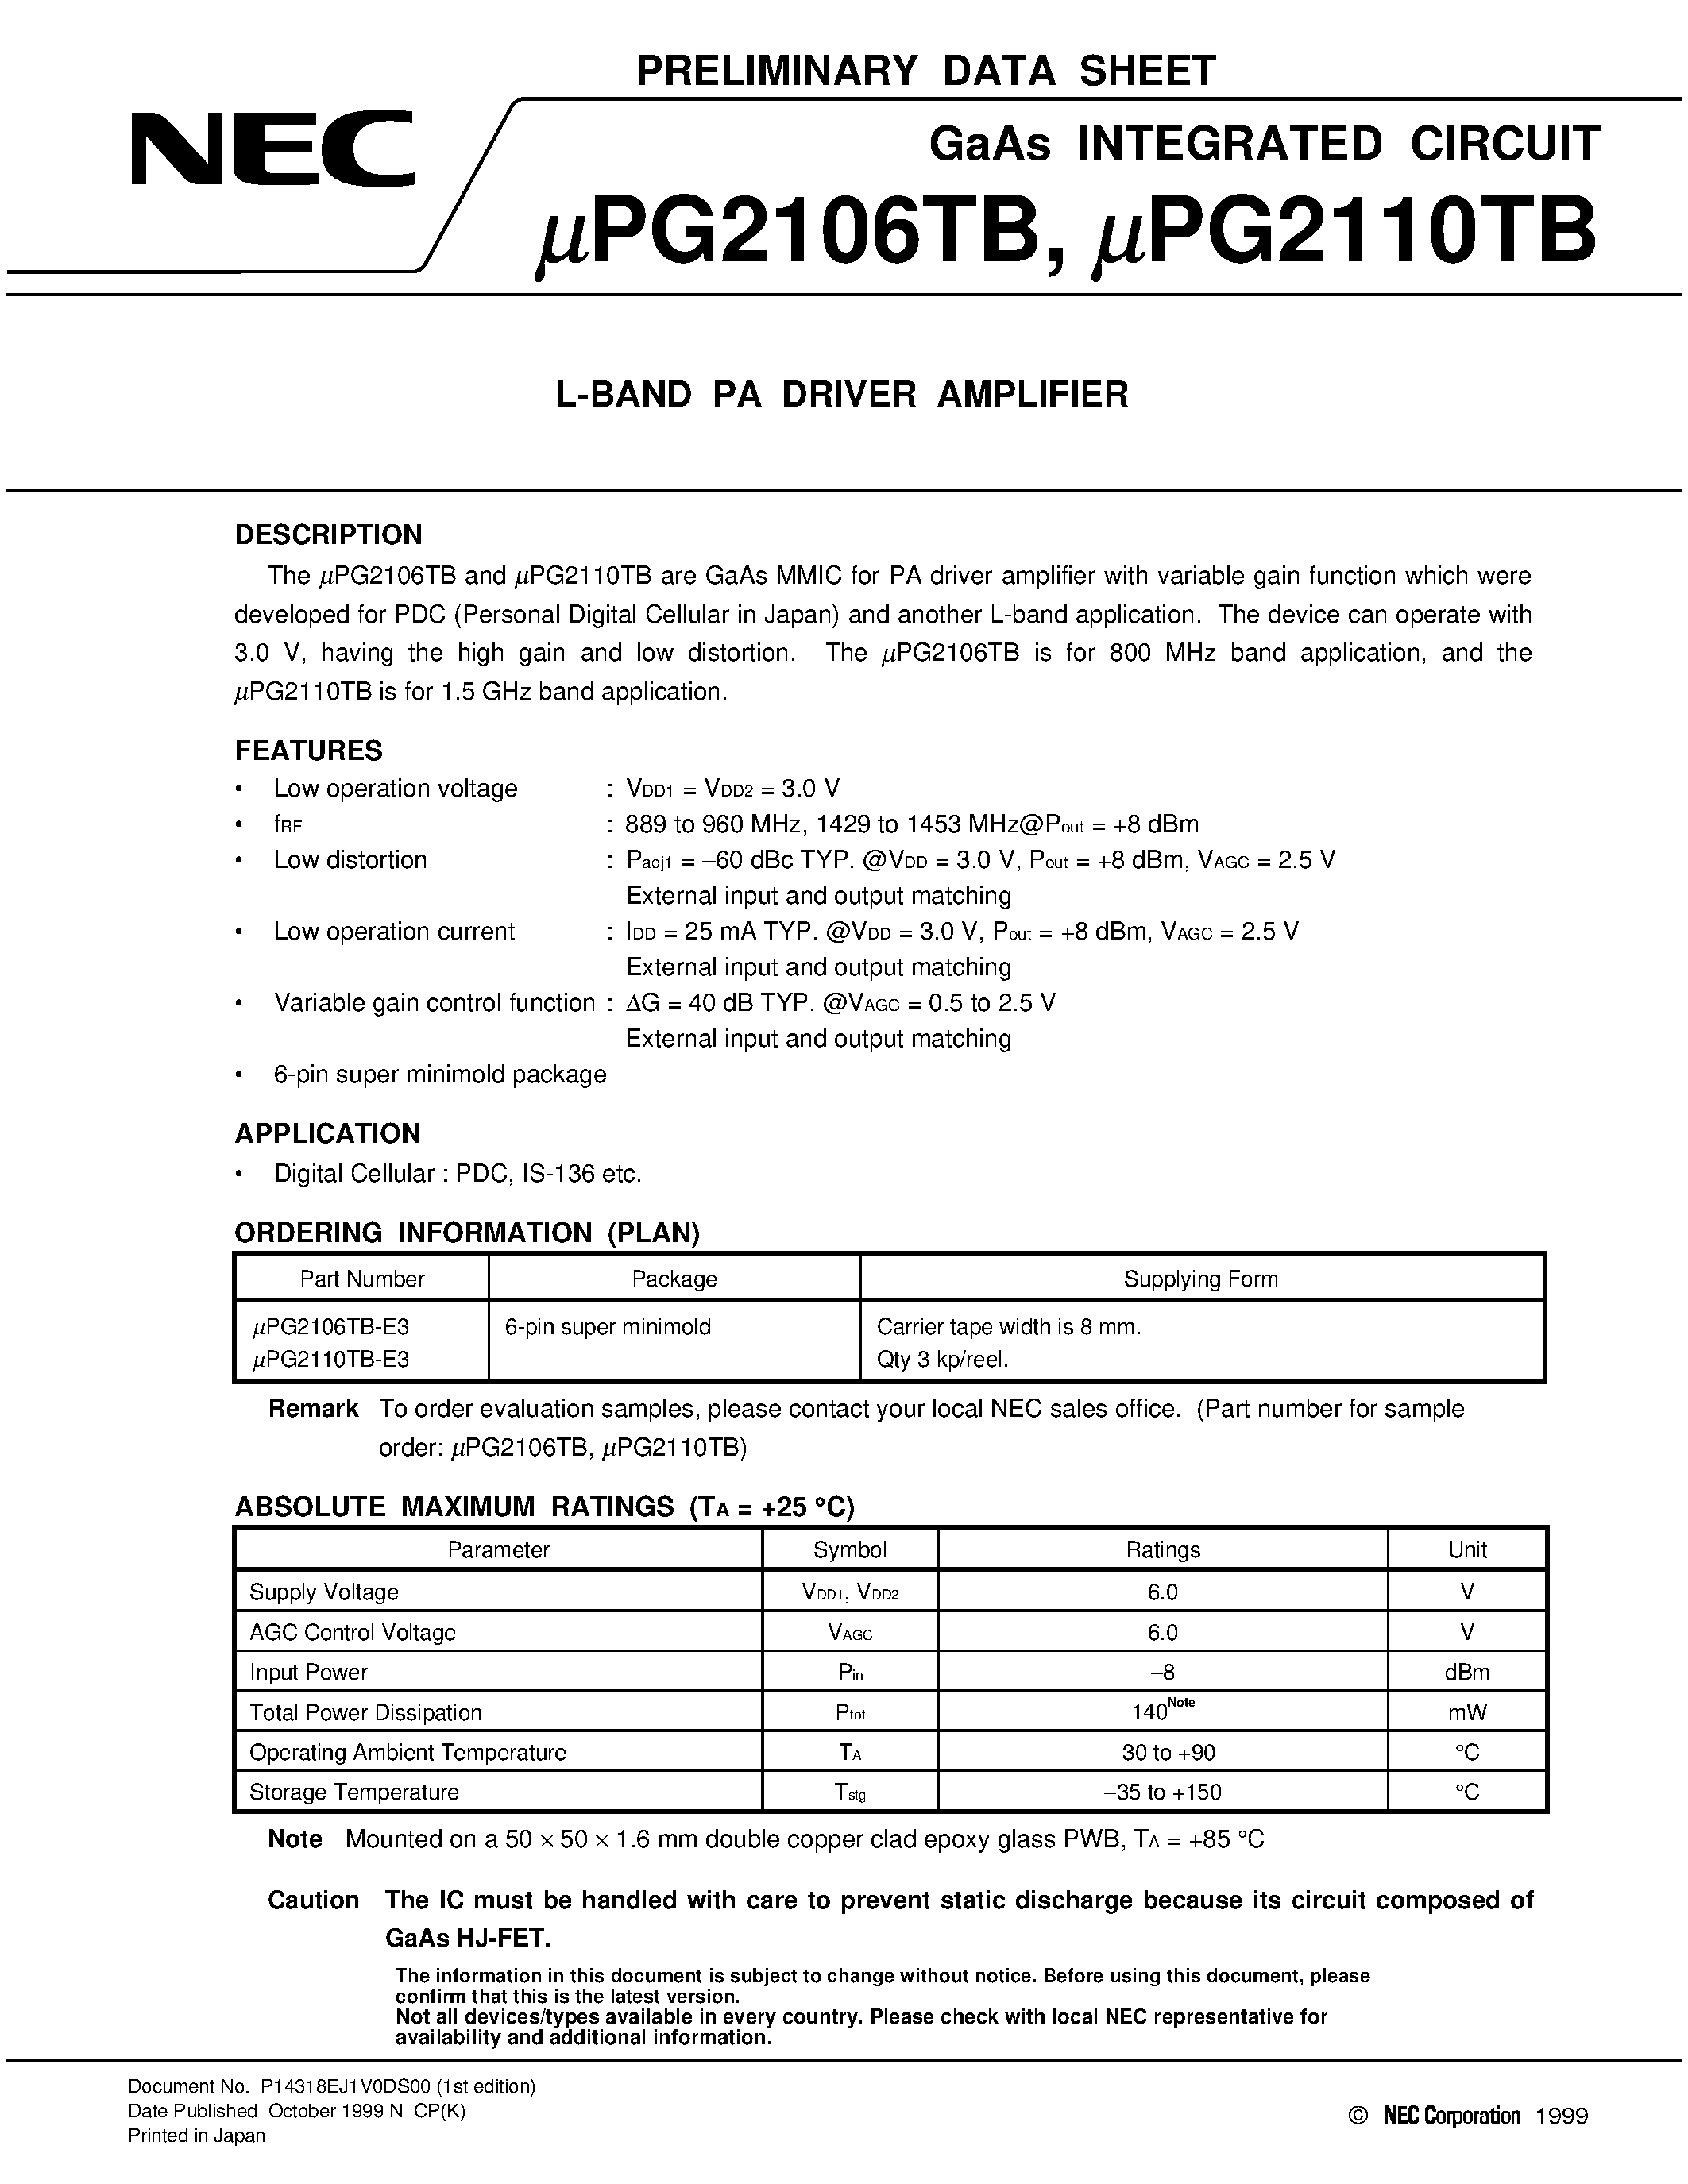 Datasheet UPG2110TB-E3 - L-BAND PA DRIVER AMPLIFIER page 1